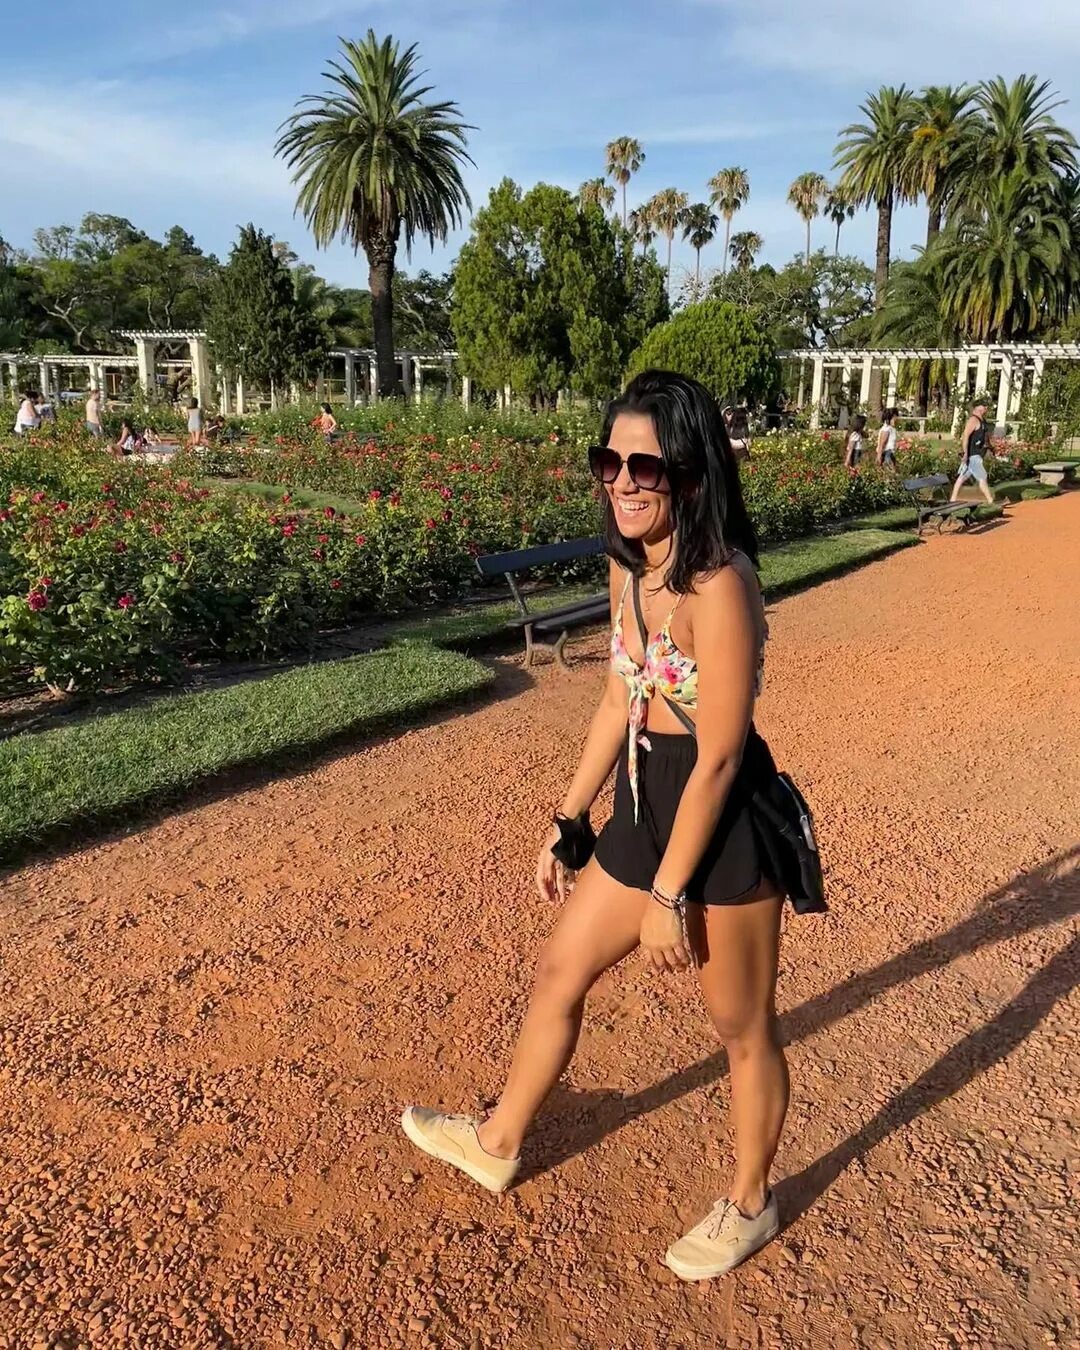 Gloris Paola Ramos 🦋 on Instagram: "Desprevenida es mejor 😅 Definiti...